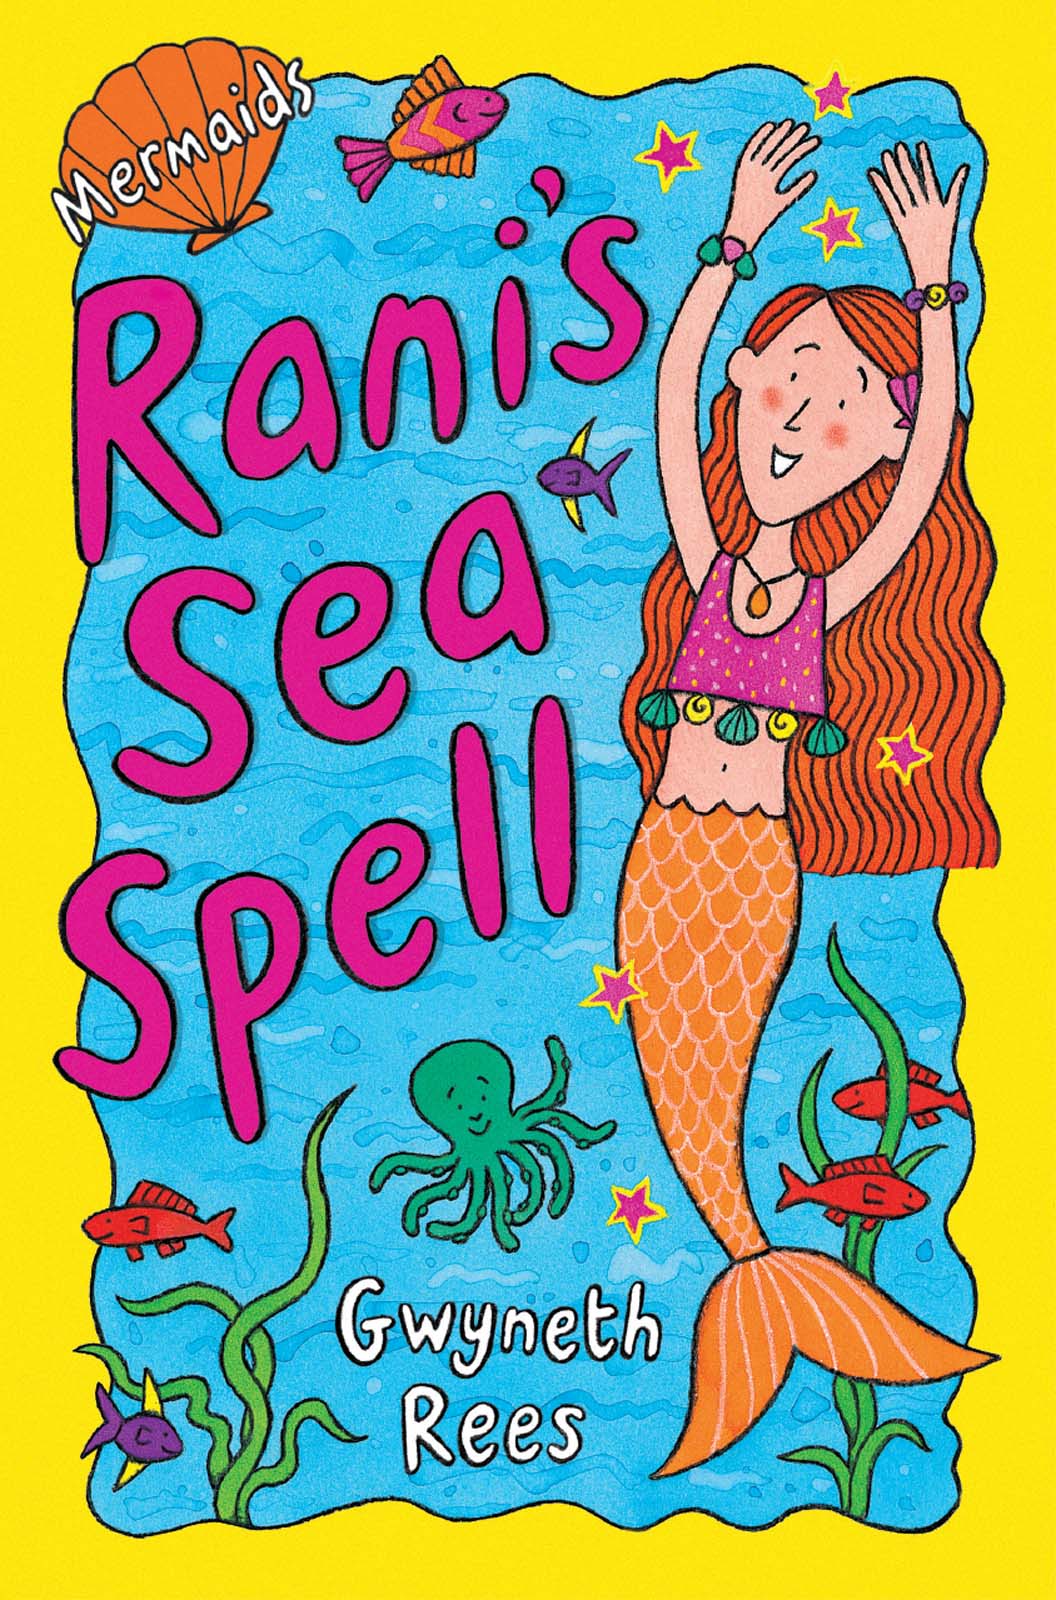 Rani's Sea Spell